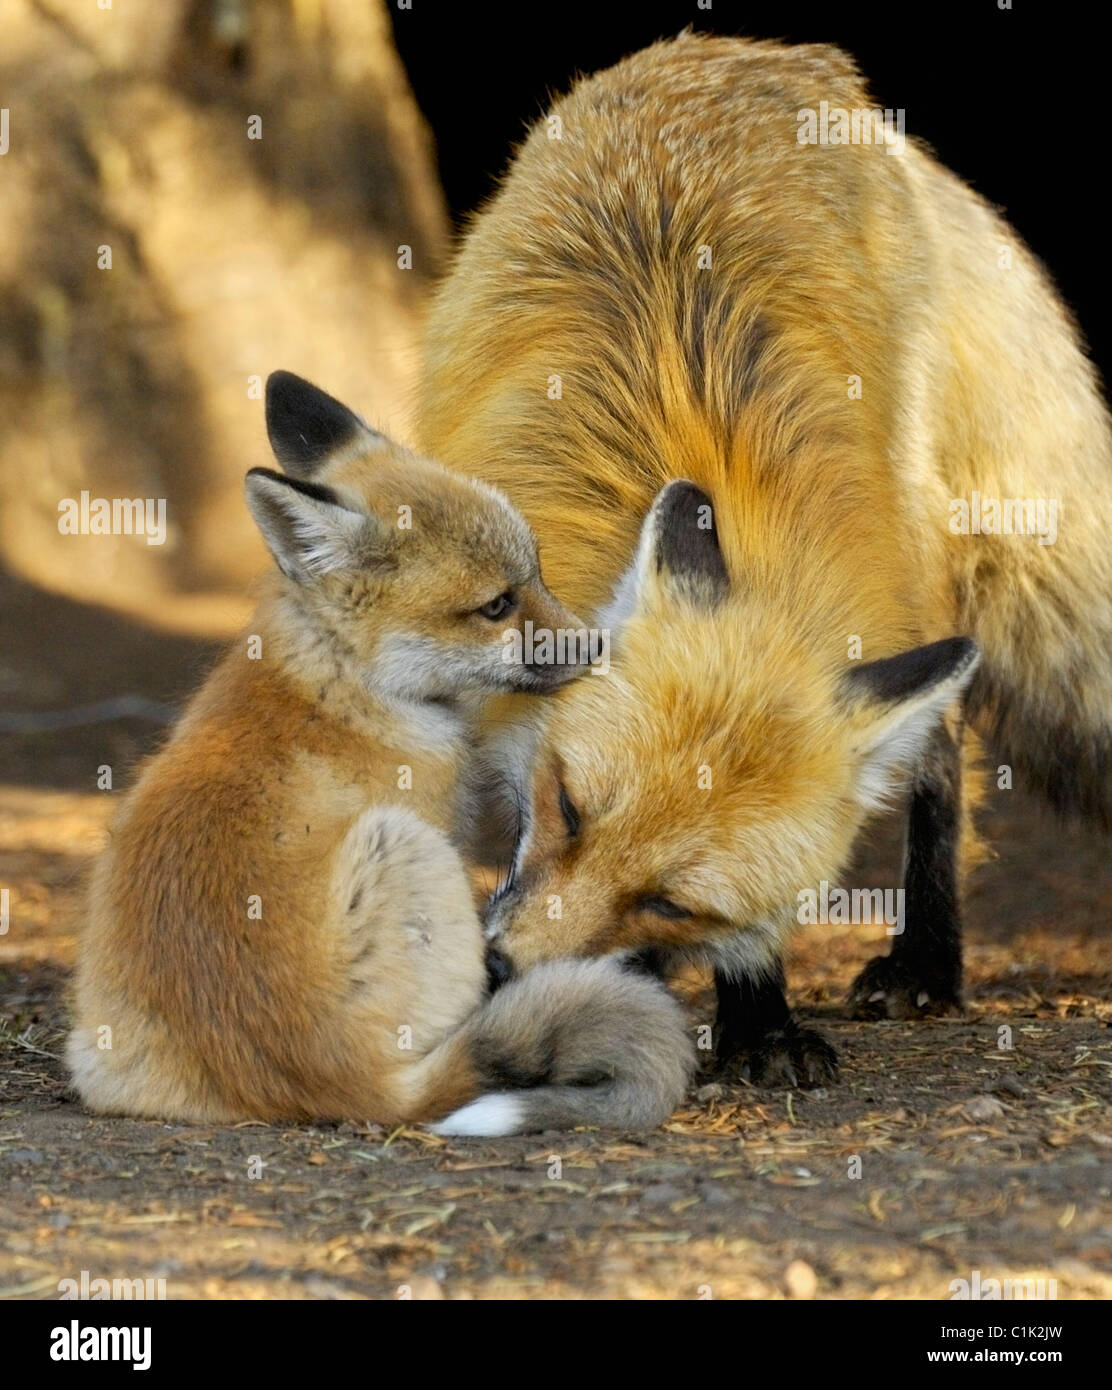 Mother fox grooming her baby. Stock Photo